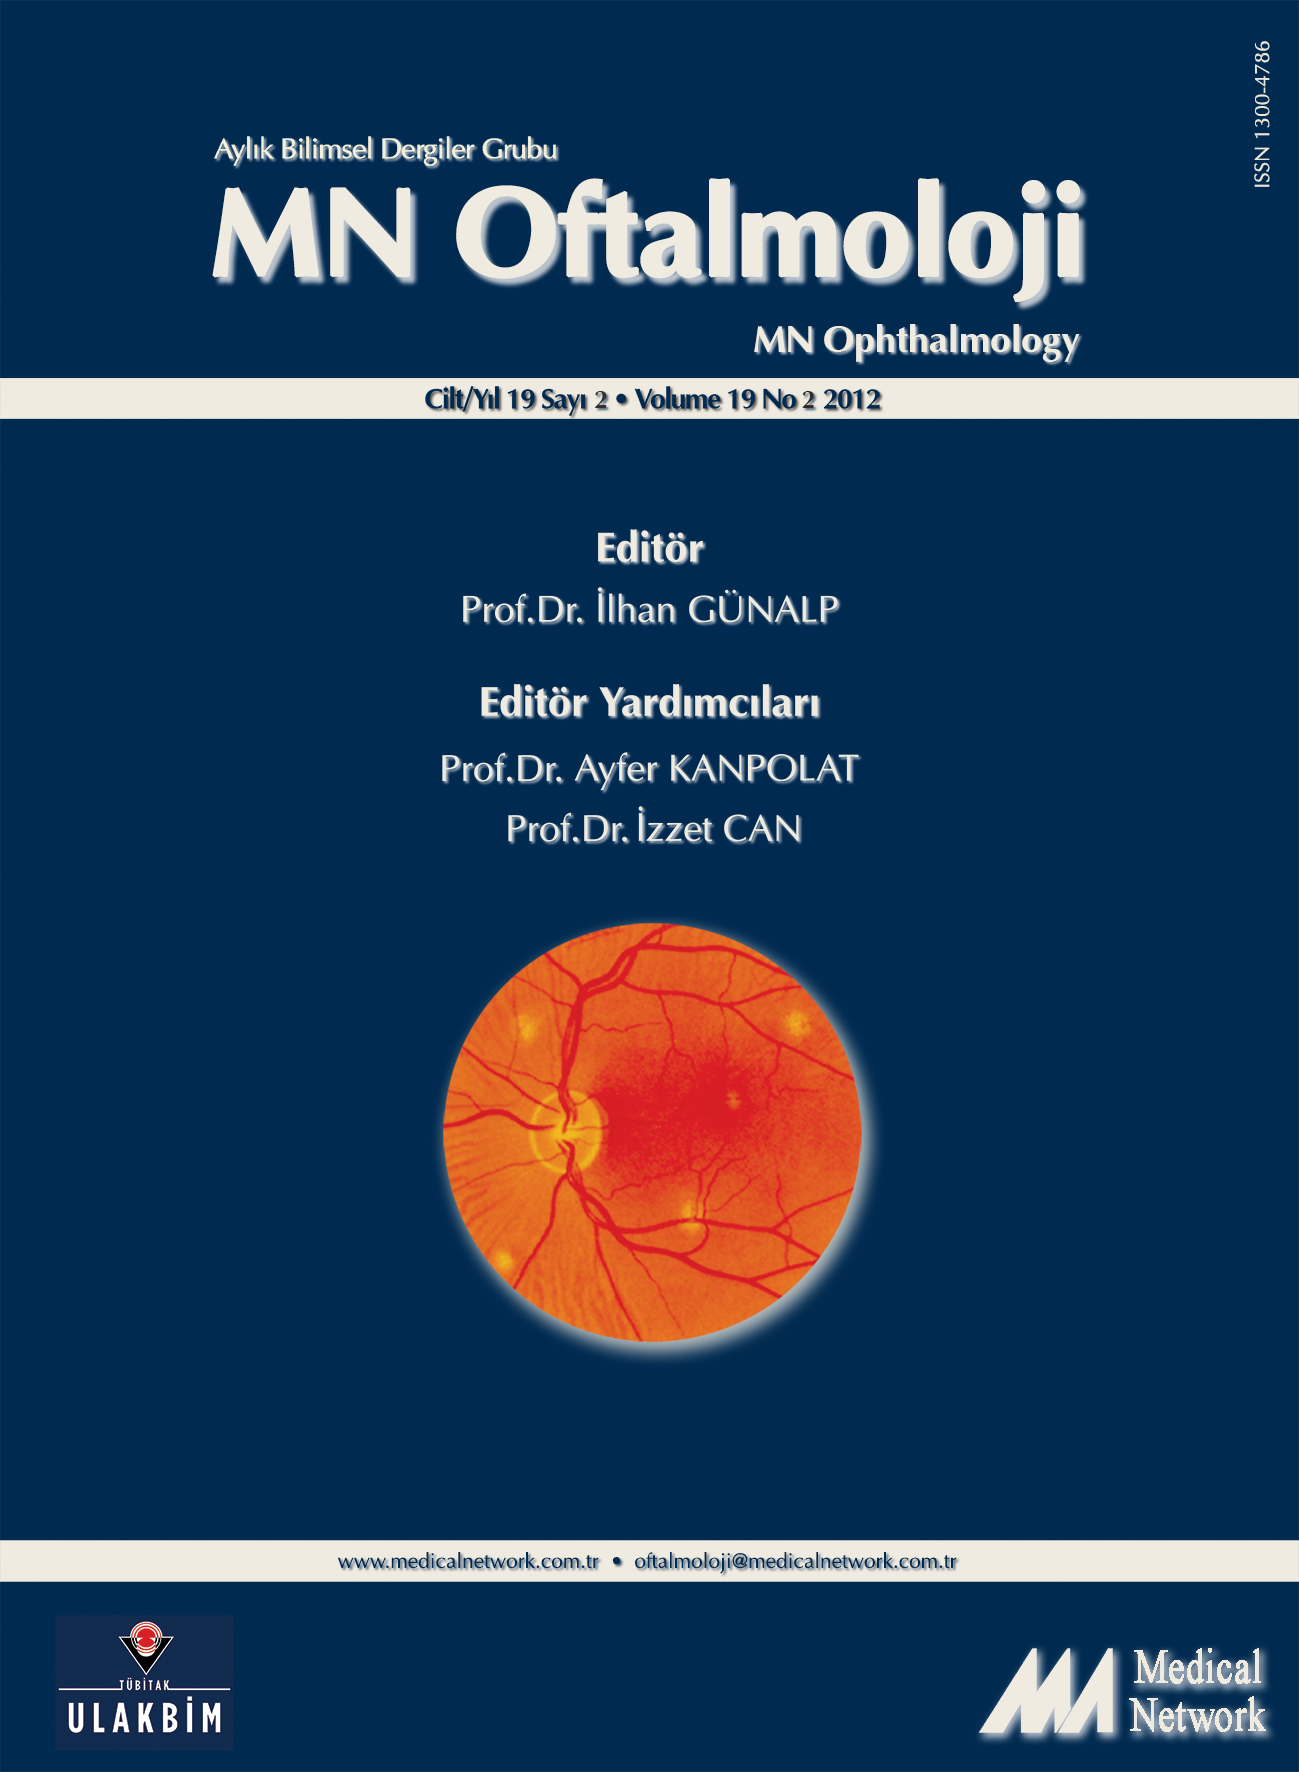 <p>MN Oftalmoloji Cilt: 19 Sayı: 2 2012 (MN Ophthalmology Volume: 19 No 2 2012)</p>